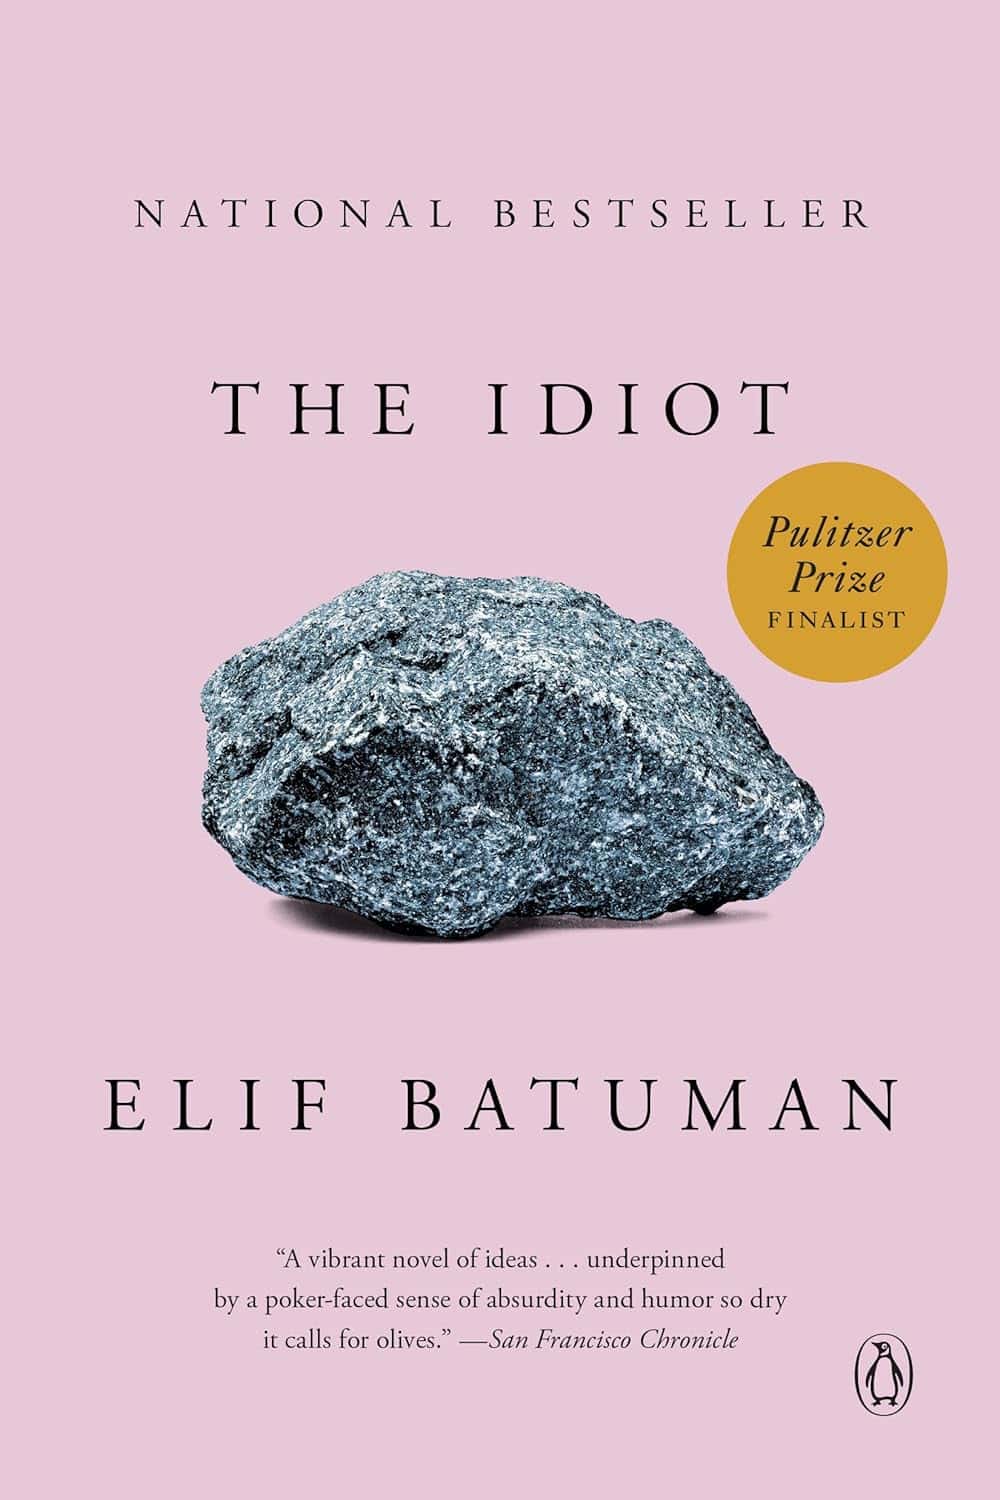 The Idiot by Elif Batuman (2017)